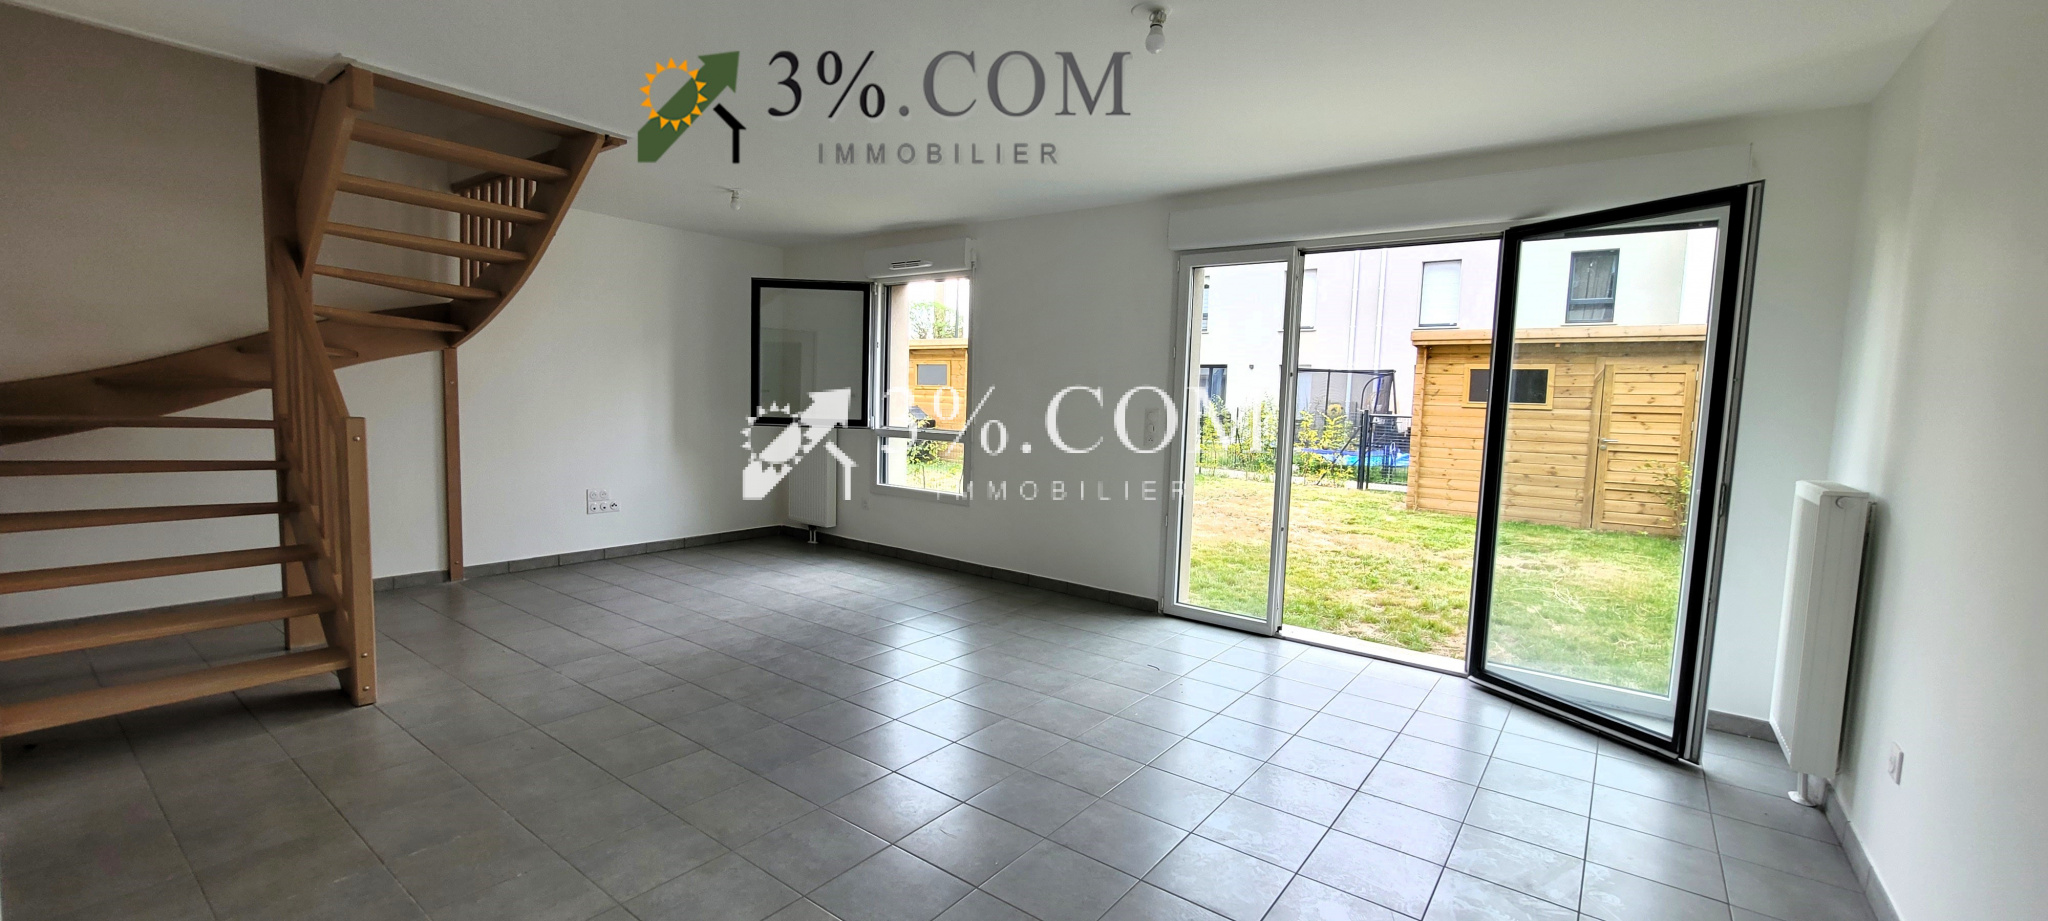 Vente Maison 84m² 4 Pièces à Tourcoing (59200) - 3%.Com